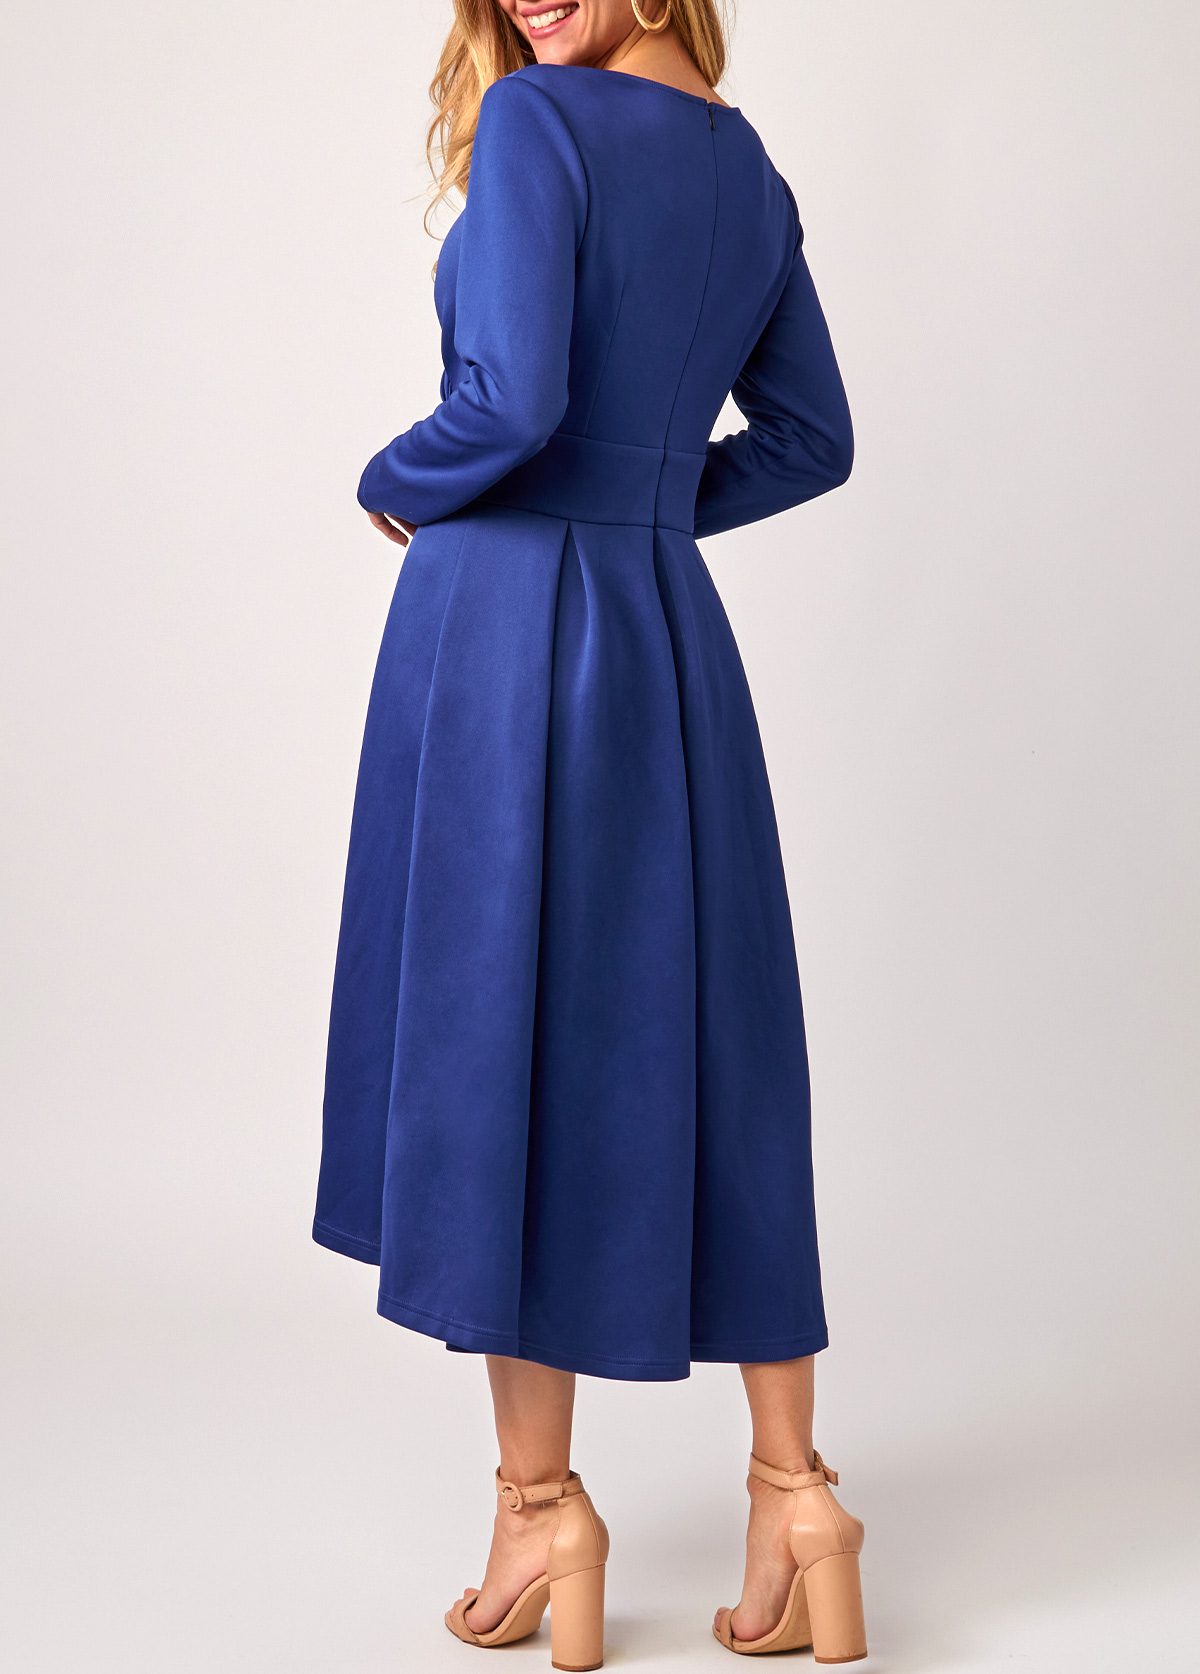 Long Sleeve Royal Blue Cross Front Dress